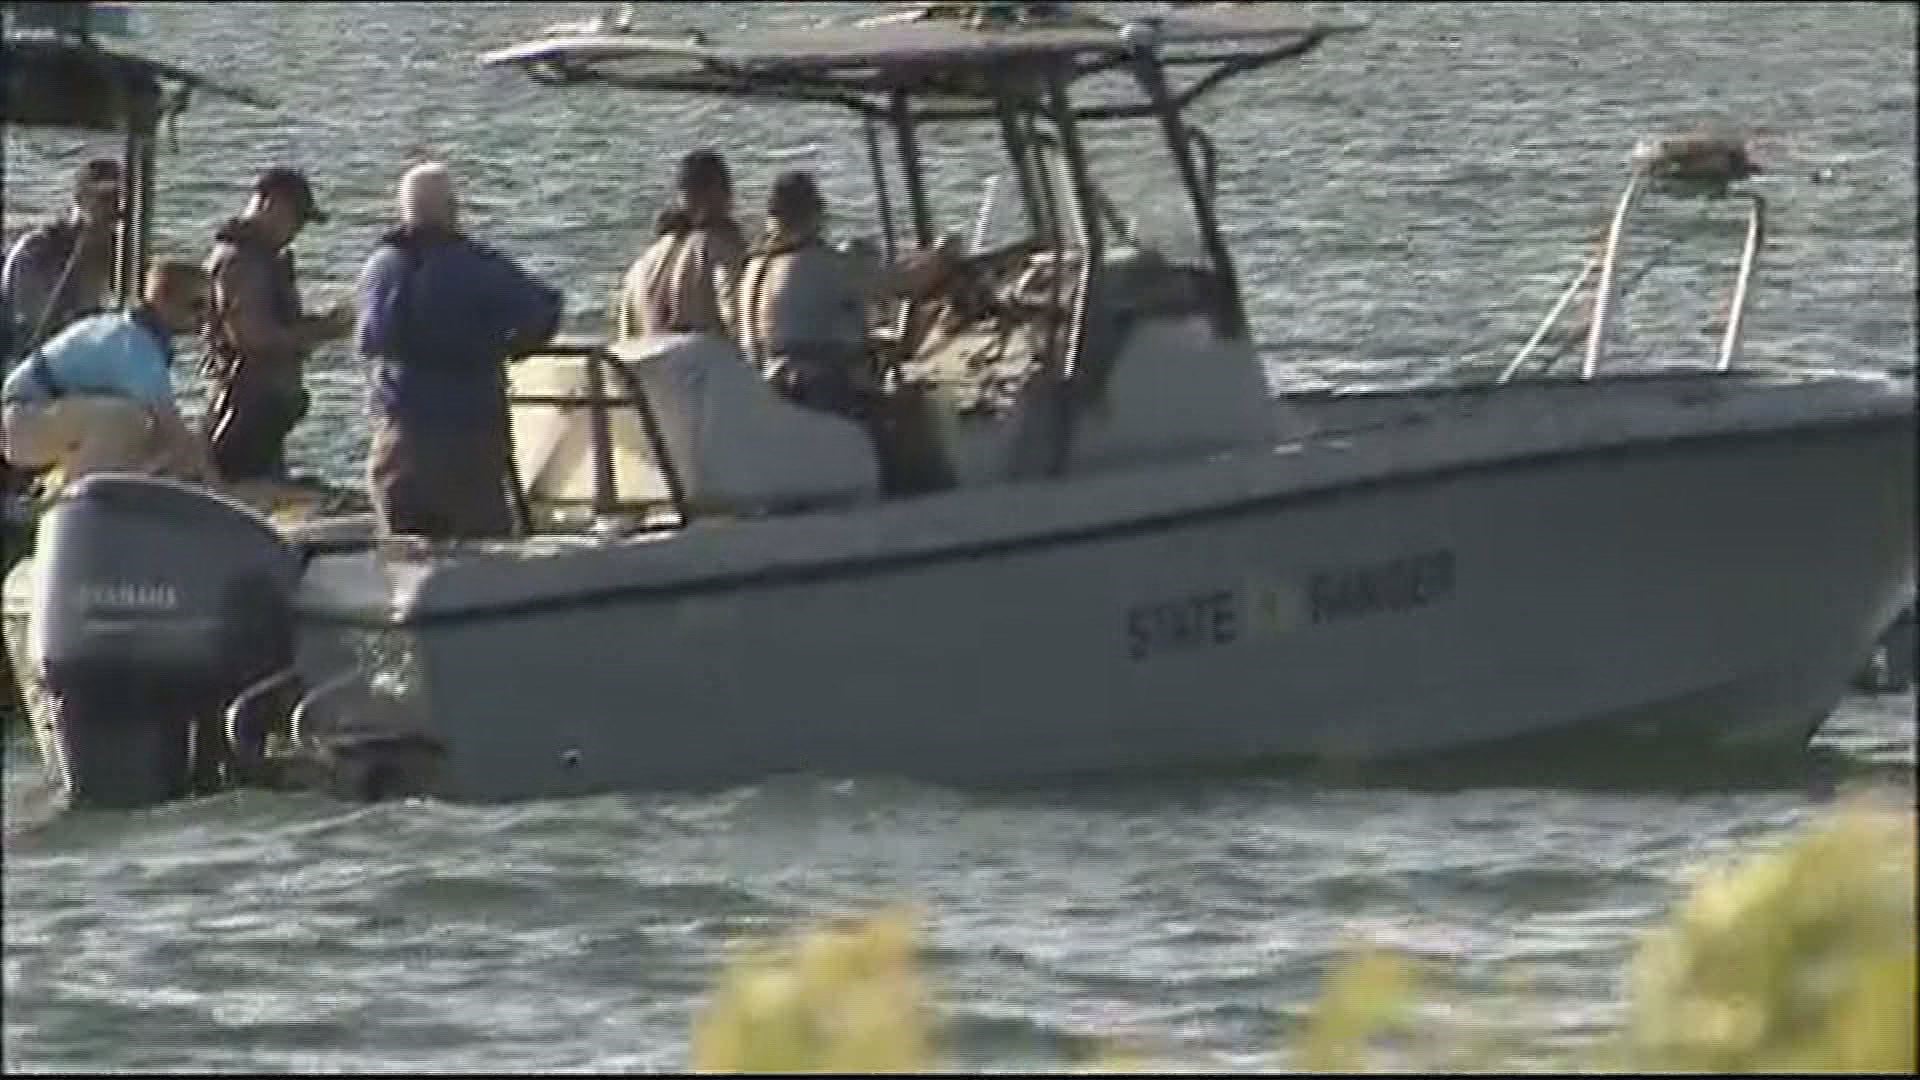 Father and son among three Sunday drownings at Lake Lanier